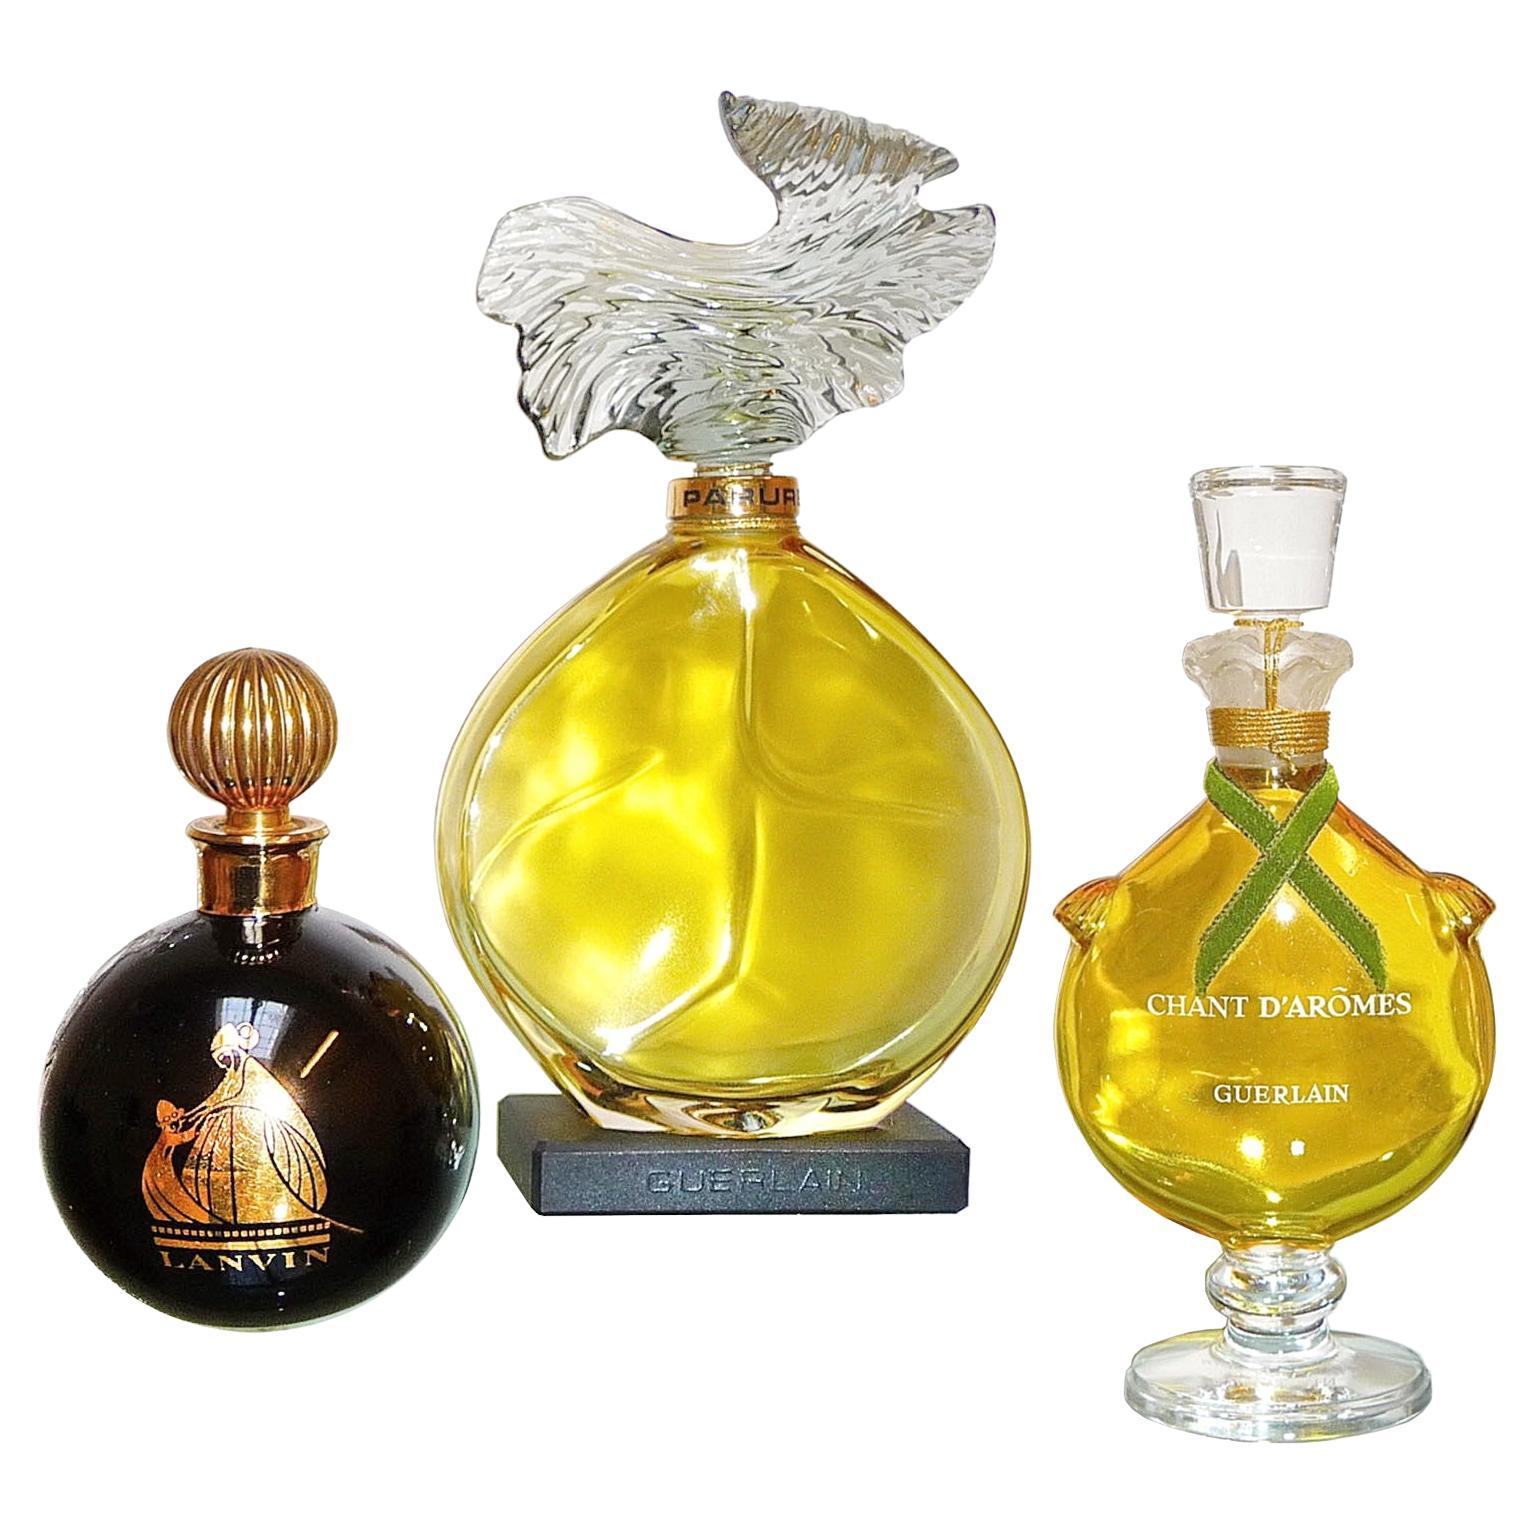 Factice Perfume Guerlain Lanvin Store Display Bottles